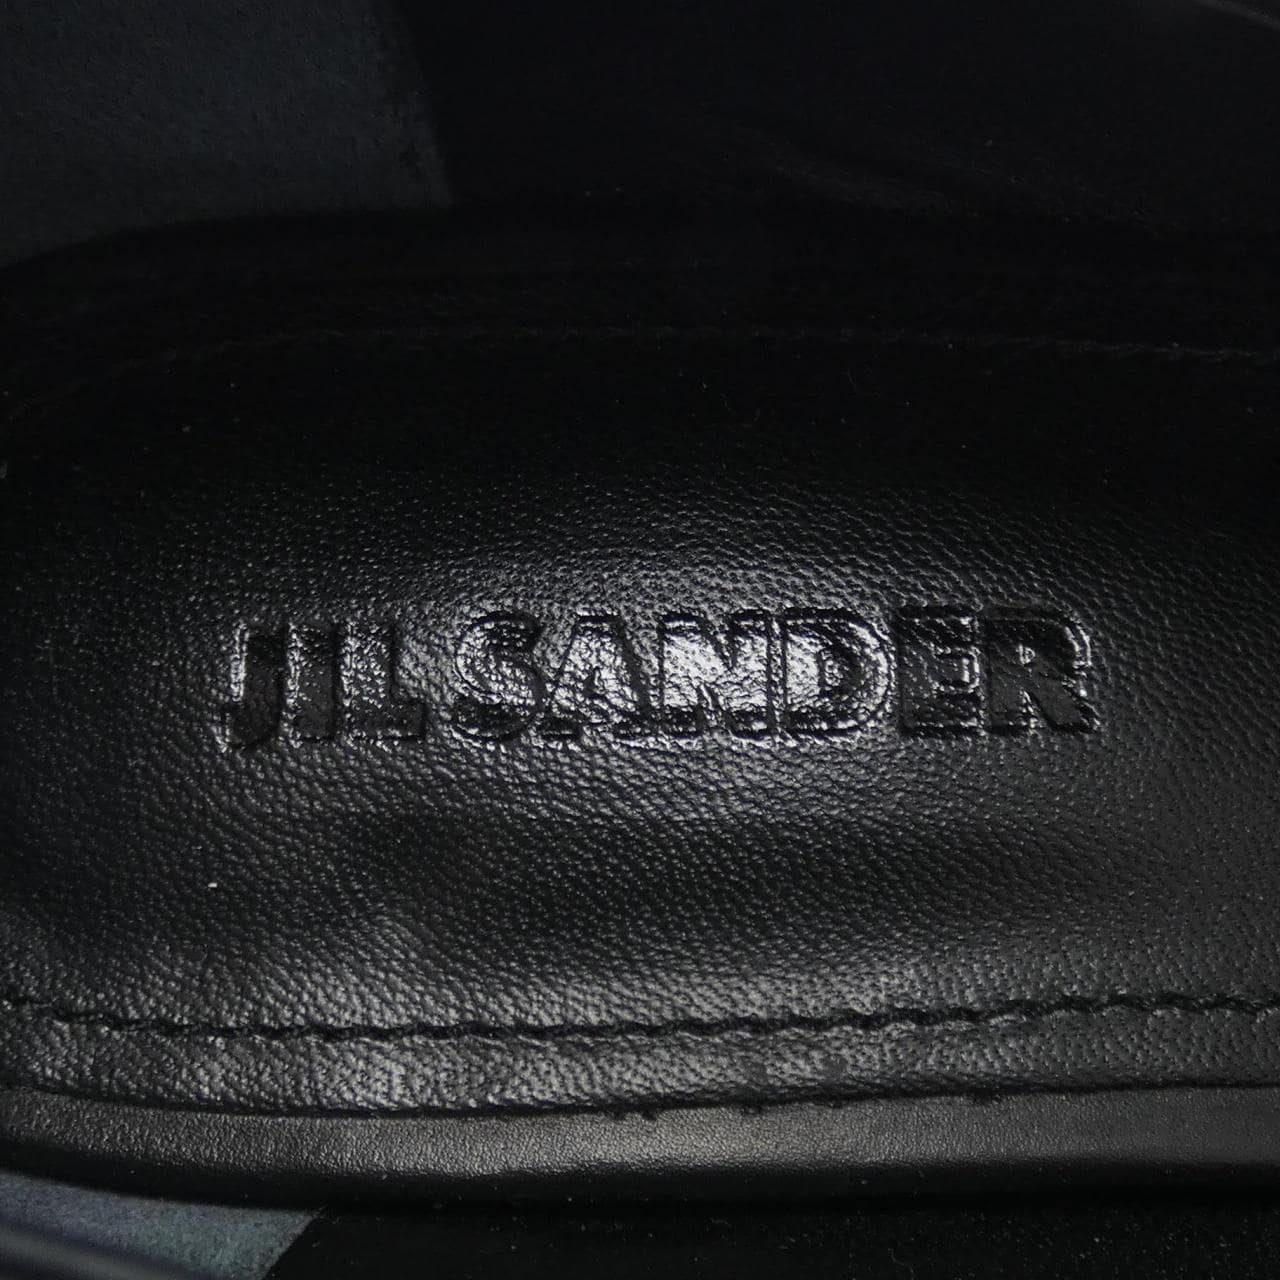 JIL SANDER Jil Sander shoes